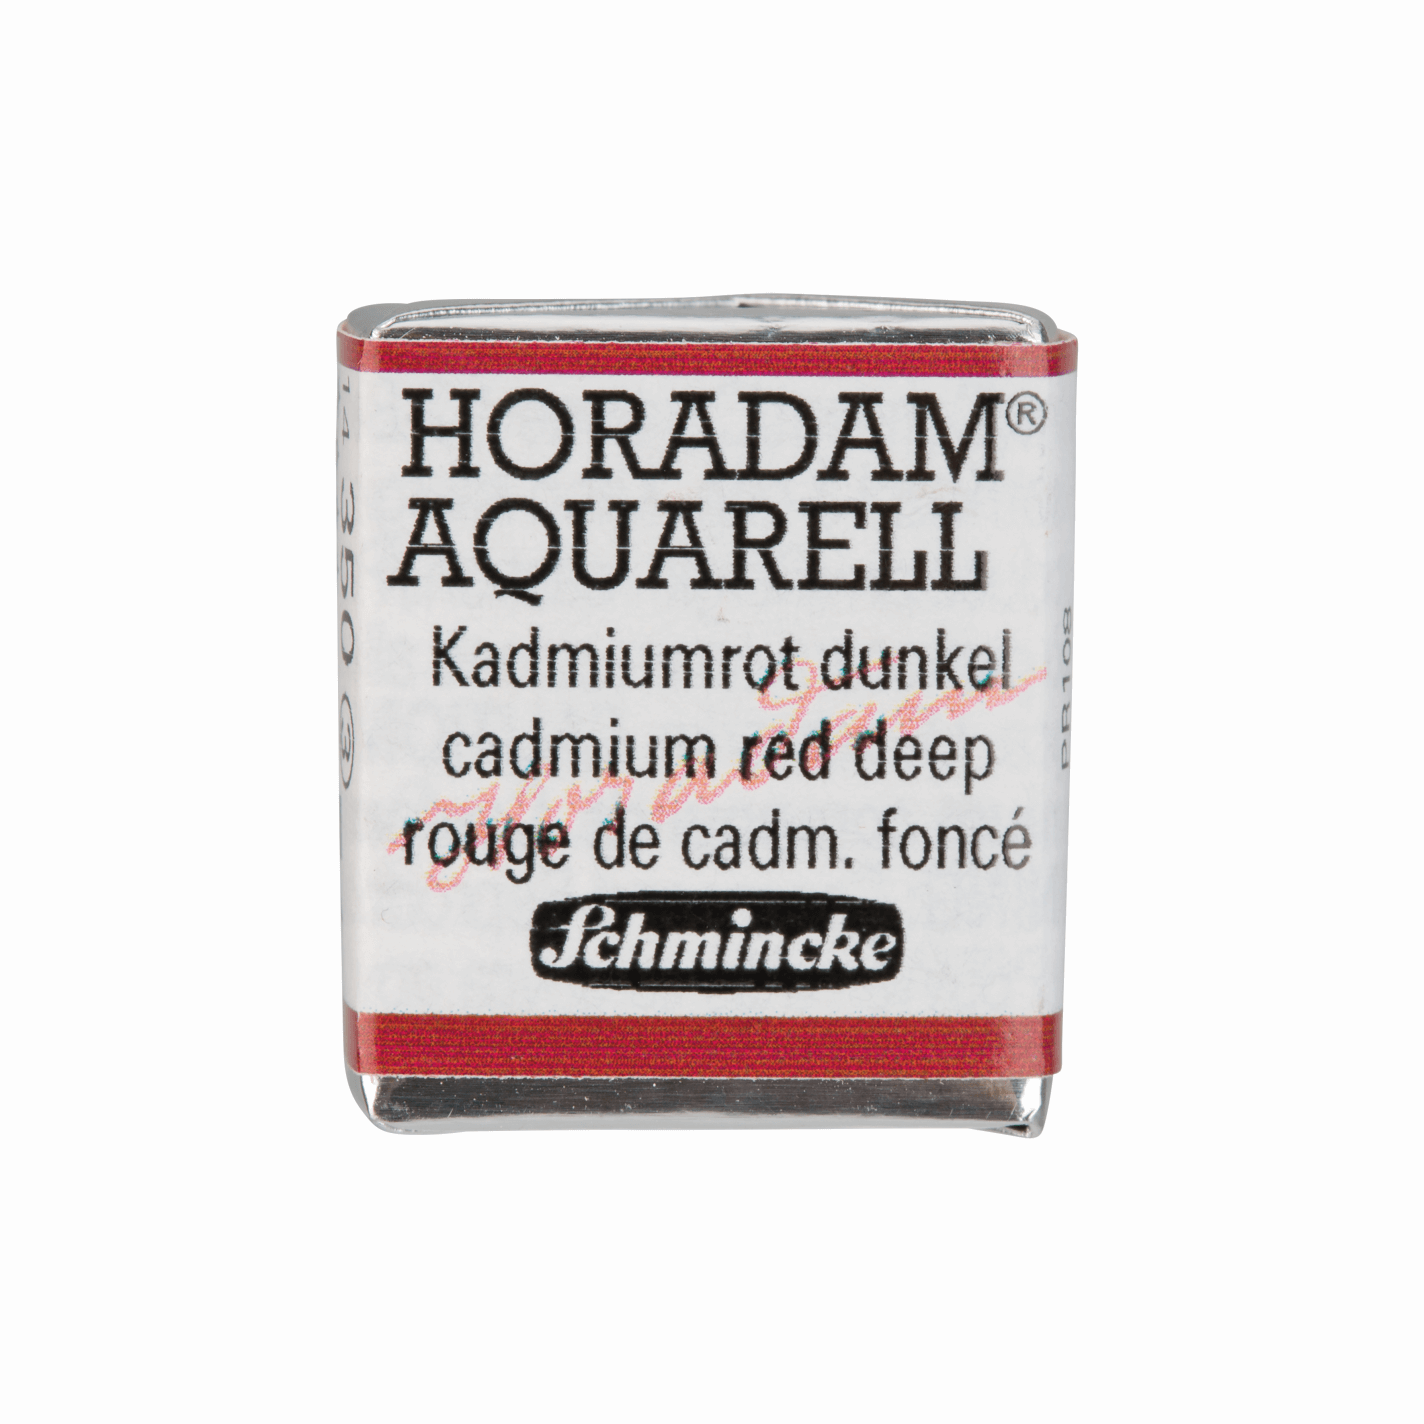 Schmincke Horadam Aquarell pans 1/2 pan Cadmium Red Deep